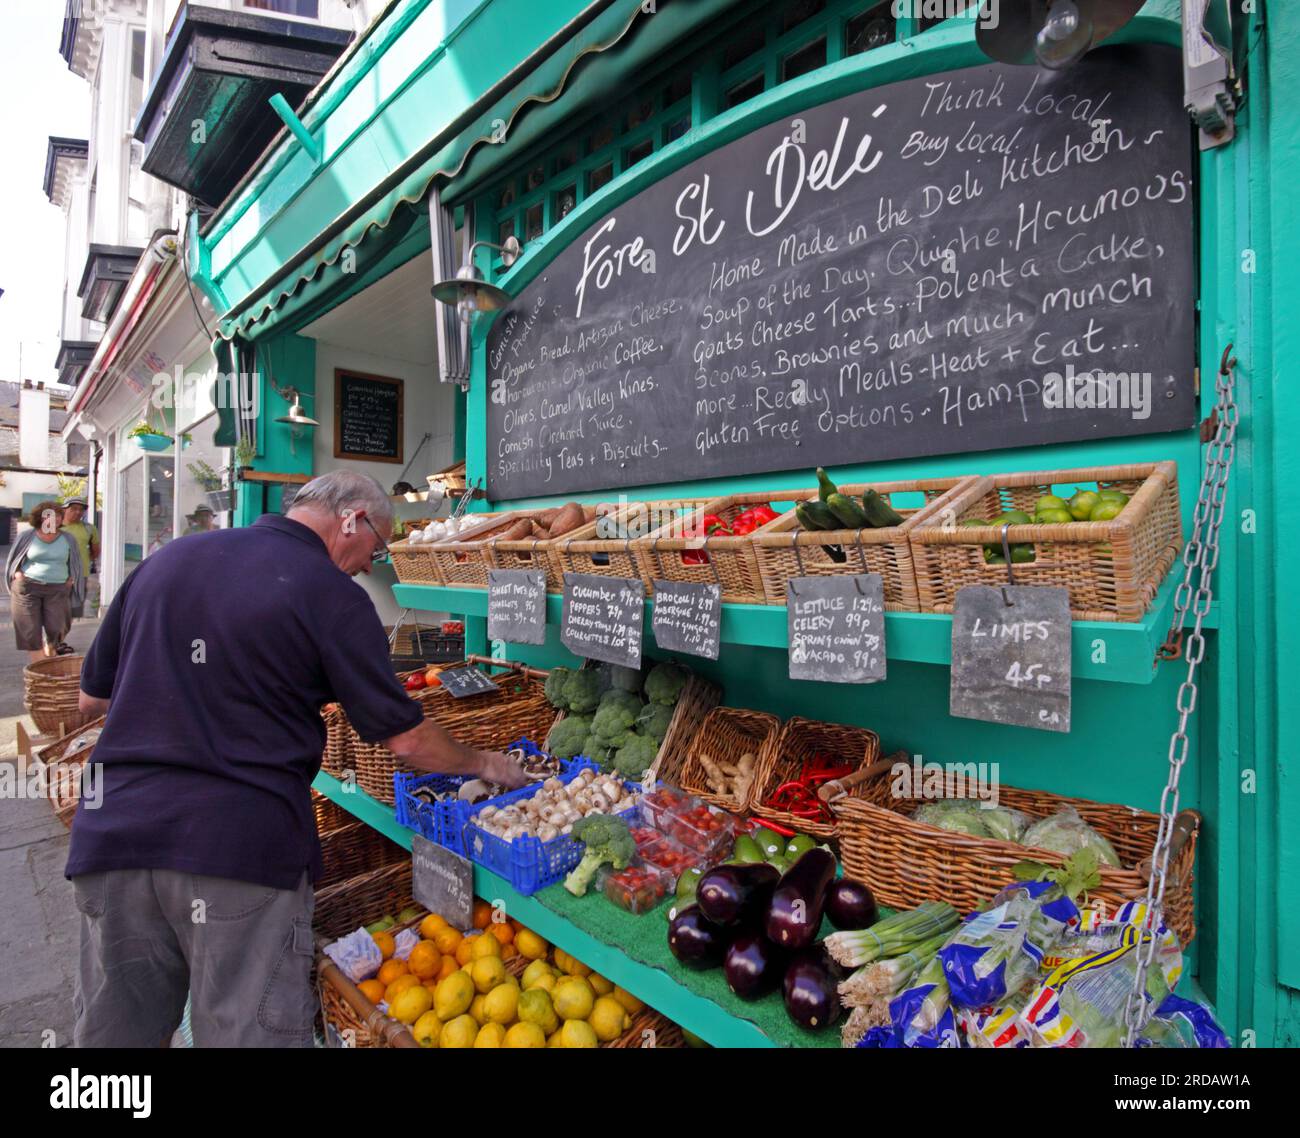 St Ives Village lokale Geschäfte, The Fore Street Deli, Obst, Gemüse, Fertiggerichte, Hampers etc. An der Tafel aufgeführt, 30A Fore St, St Ives, Cornwall Stockfoto